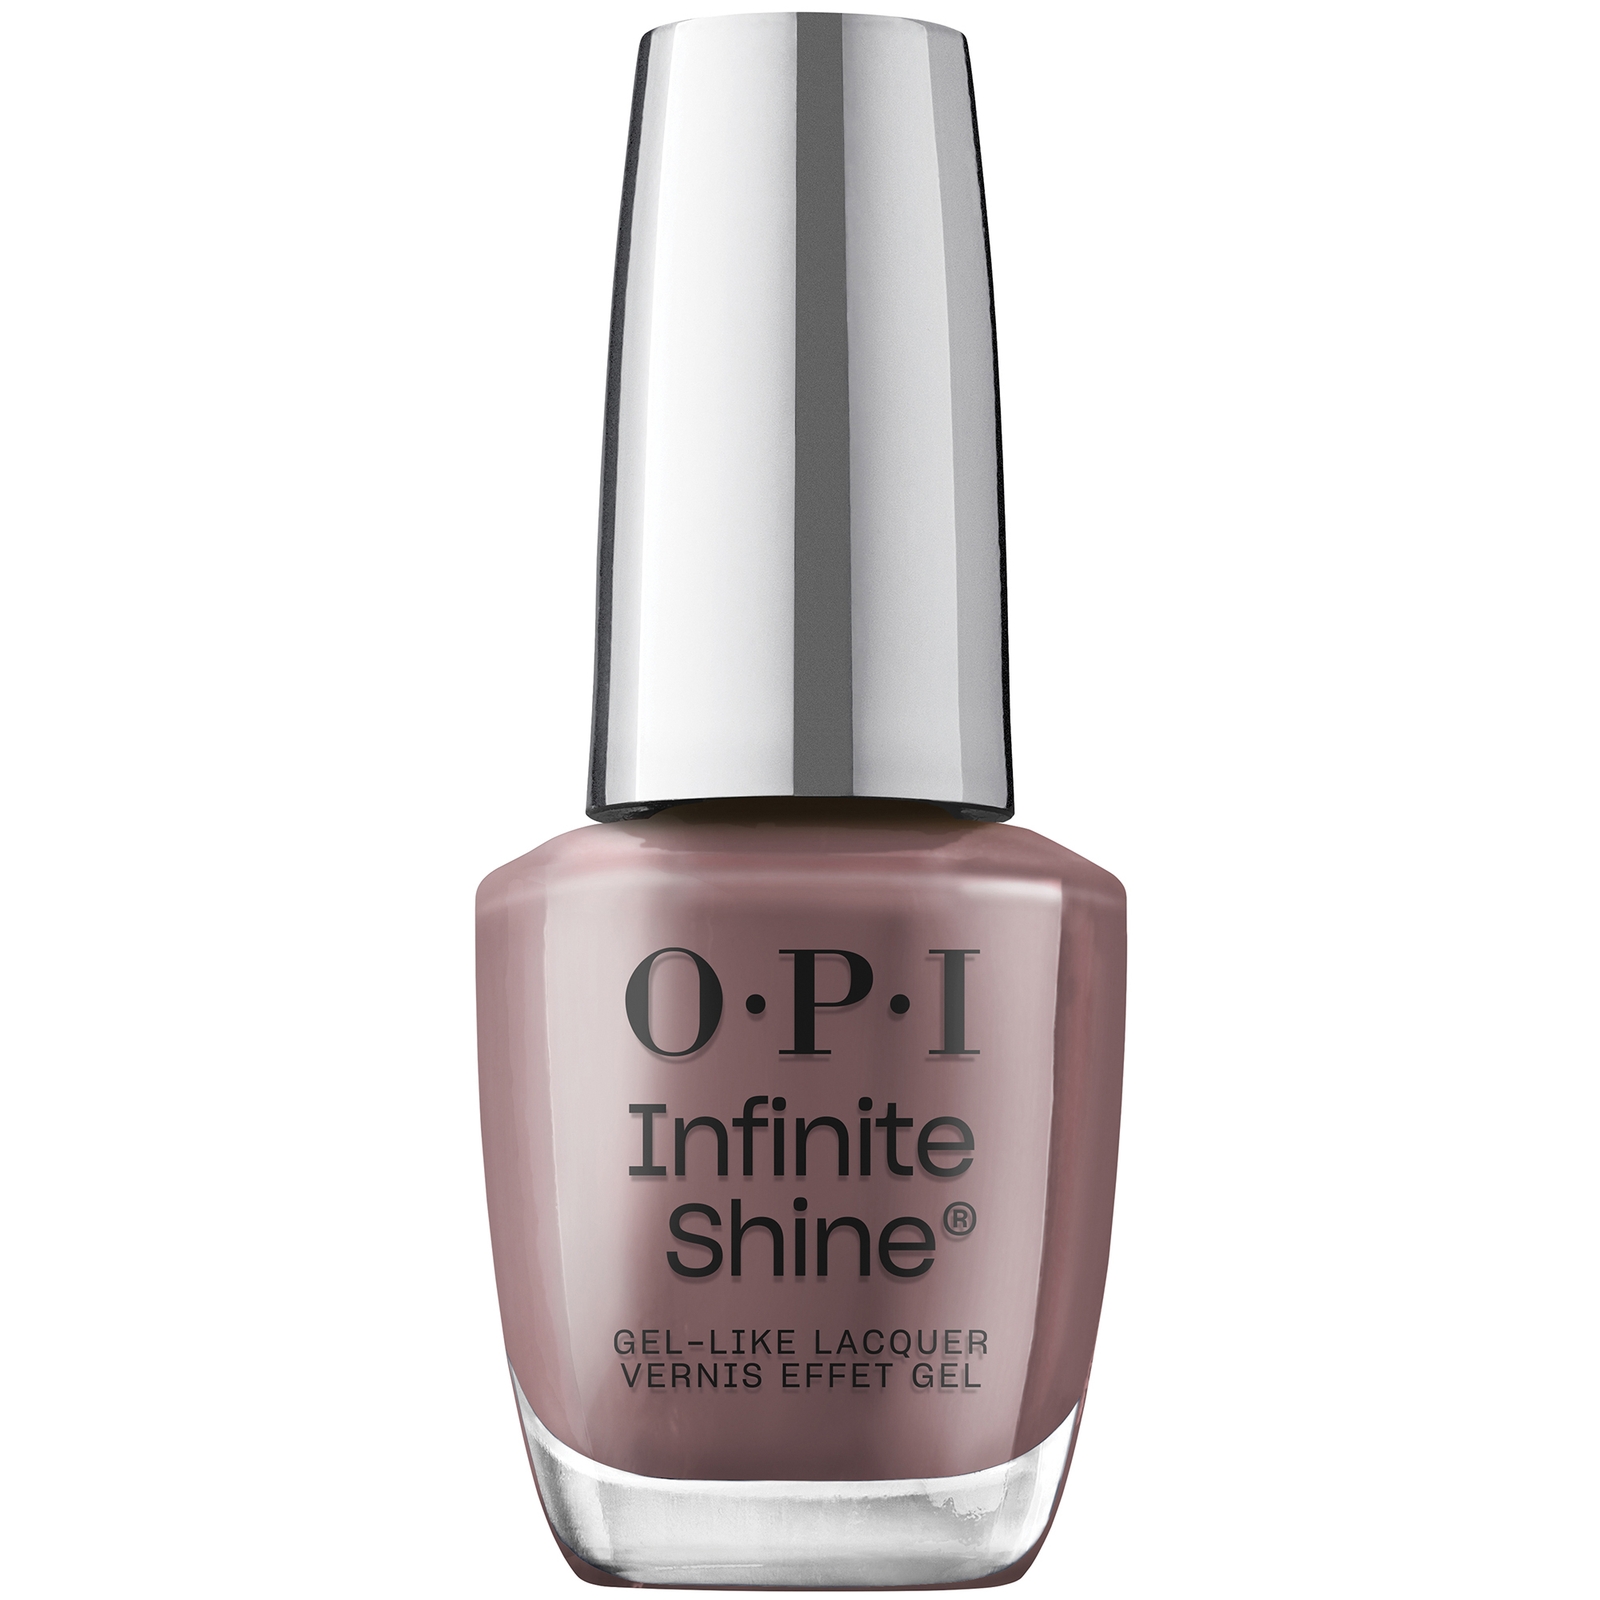 OPI Infinite Shine Long-Wear Nail Polish - You Don't Know Jacques 15ml